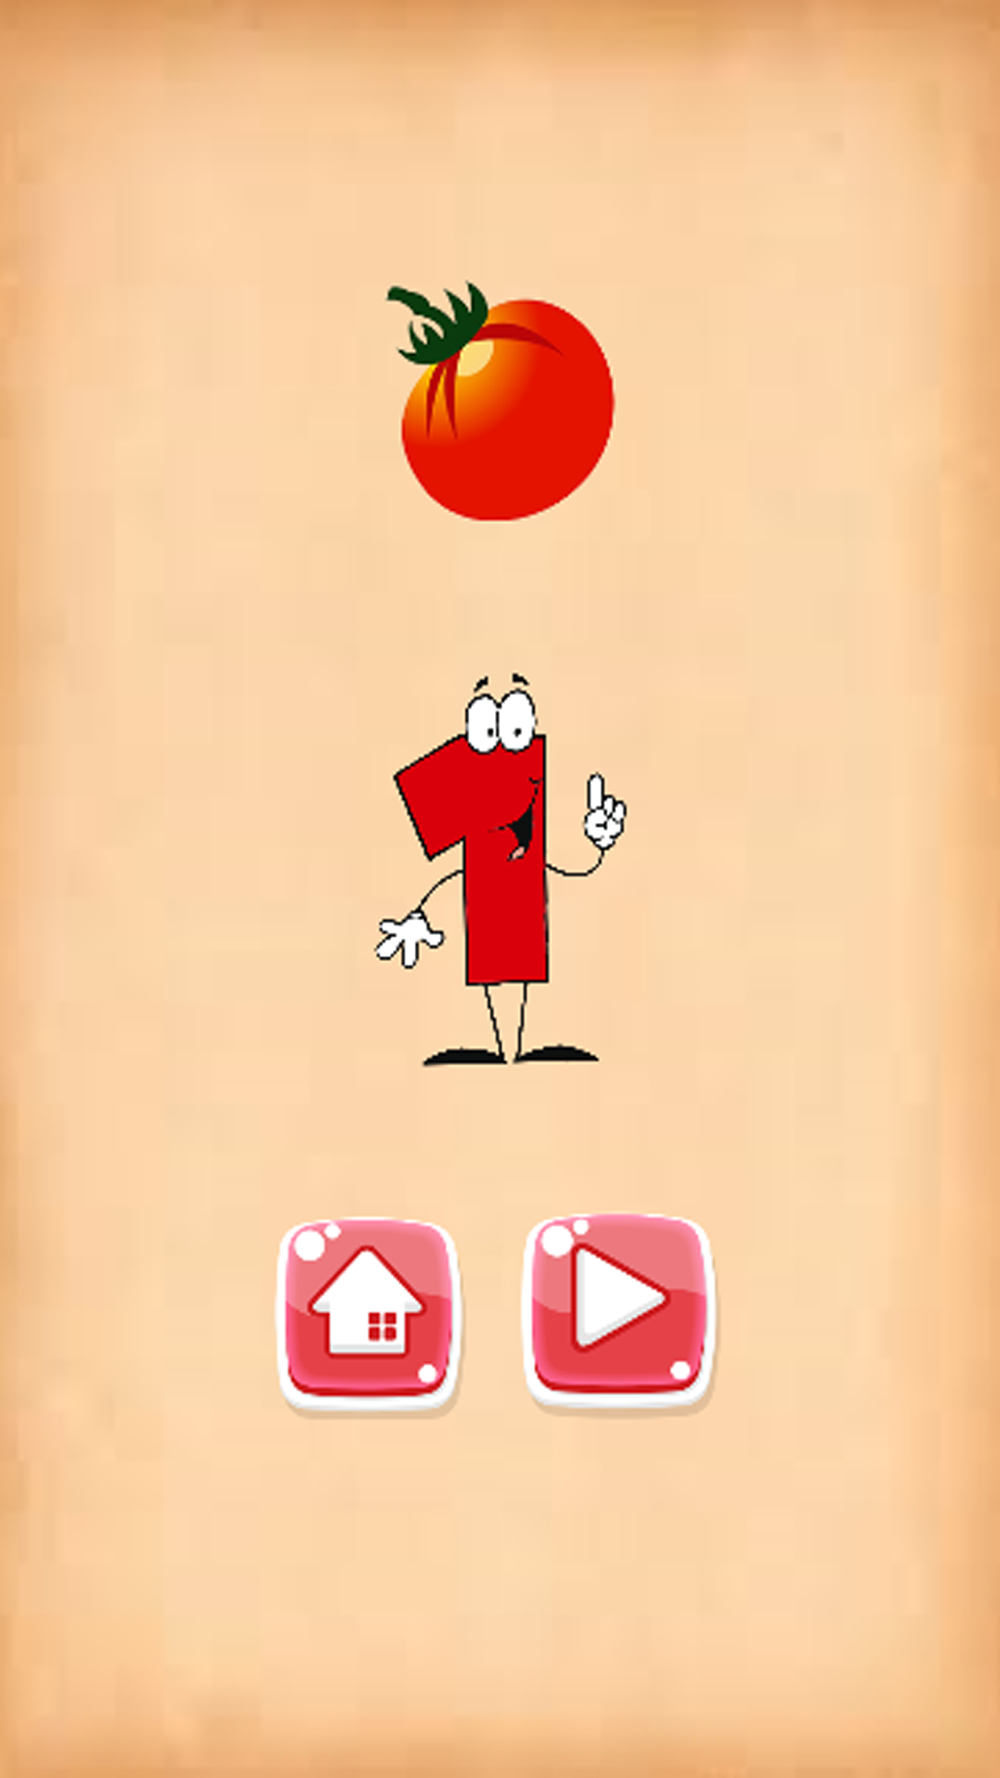 数学游戏为儿童 学习如何加法和减法free Download App For Iphone Steprimo Com